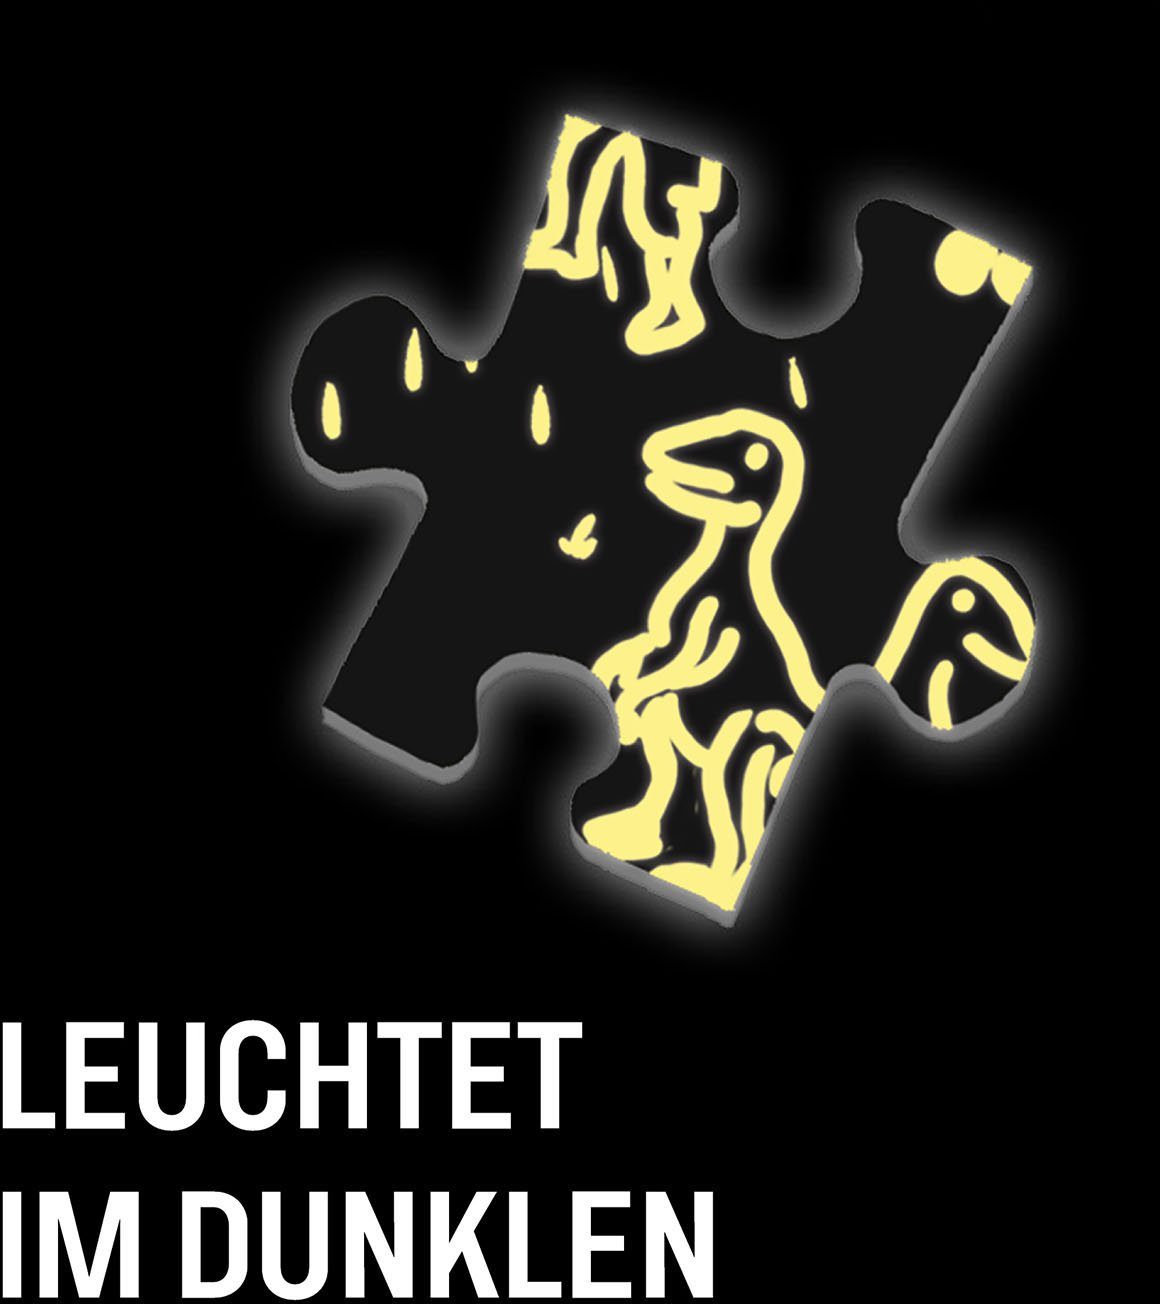 Made 200 drei Kosmos Die in in Germany Puzzleteile, T-Rex Puzzle Action, Kids Krimipuzzle ???